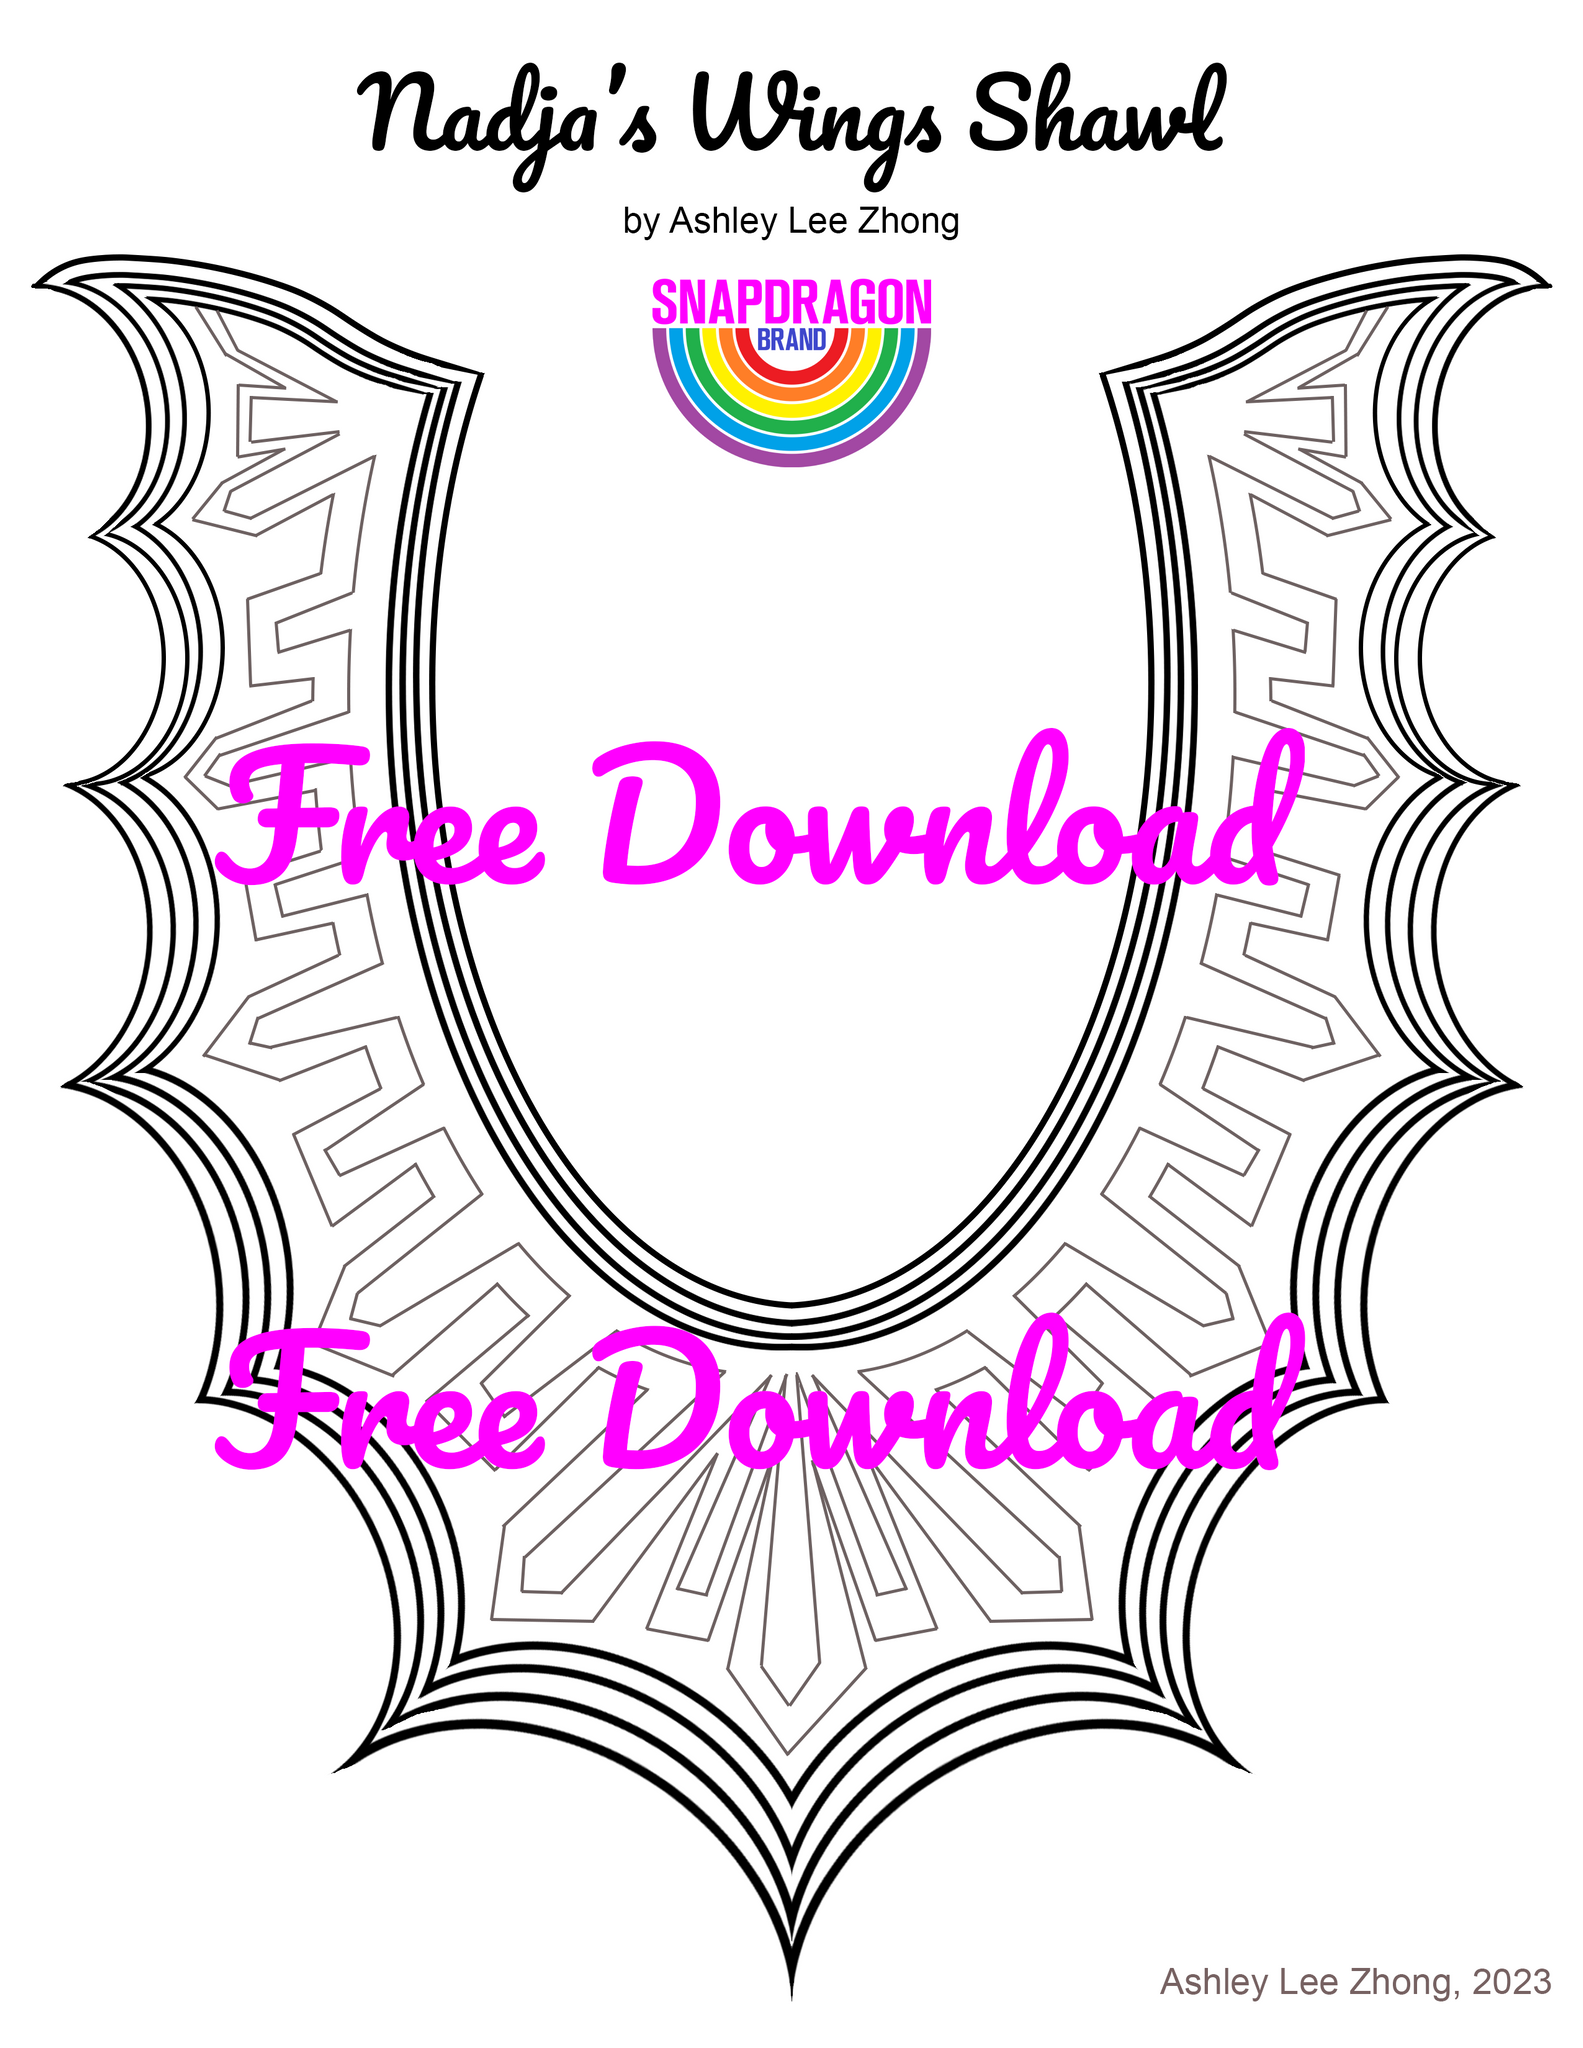 "Nadja's Wings Shawl" Free Downloadable Coloring Sheet